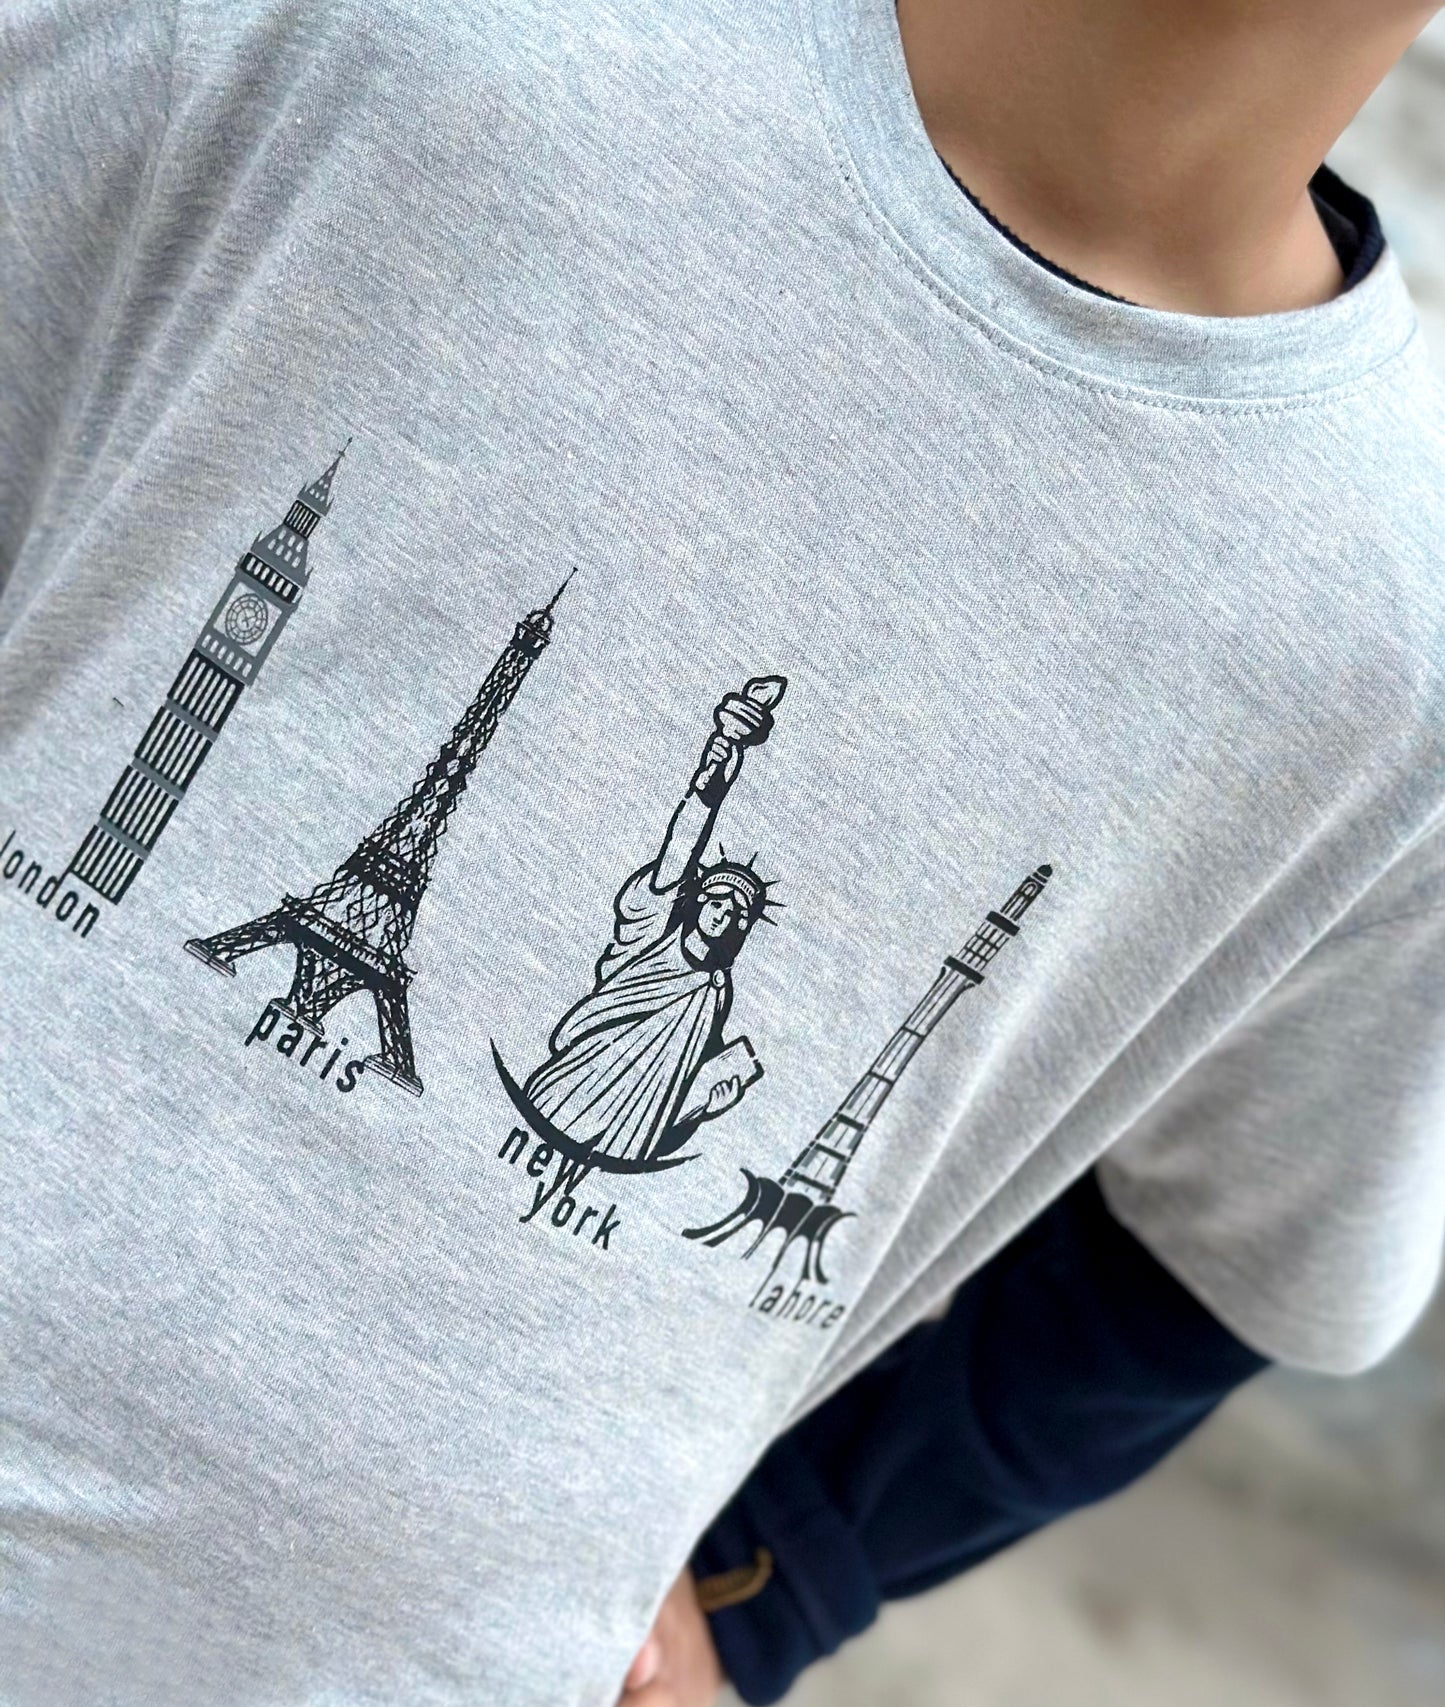 Minar-e-Pakistan T-shirt